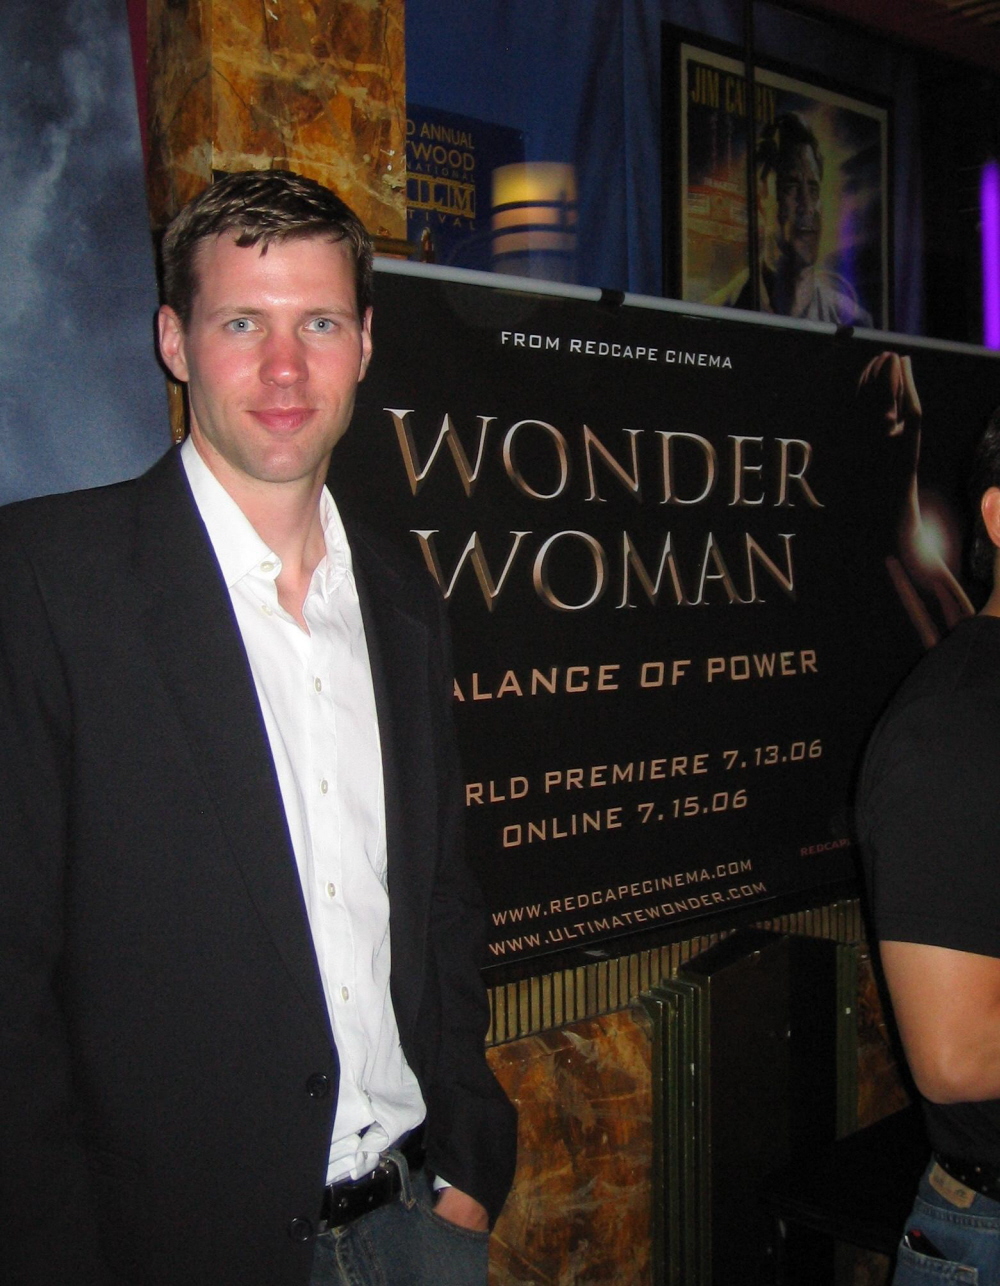 Premiere of Wonder Woman: Balance of Power. Joe Spence as Steve Trevor.